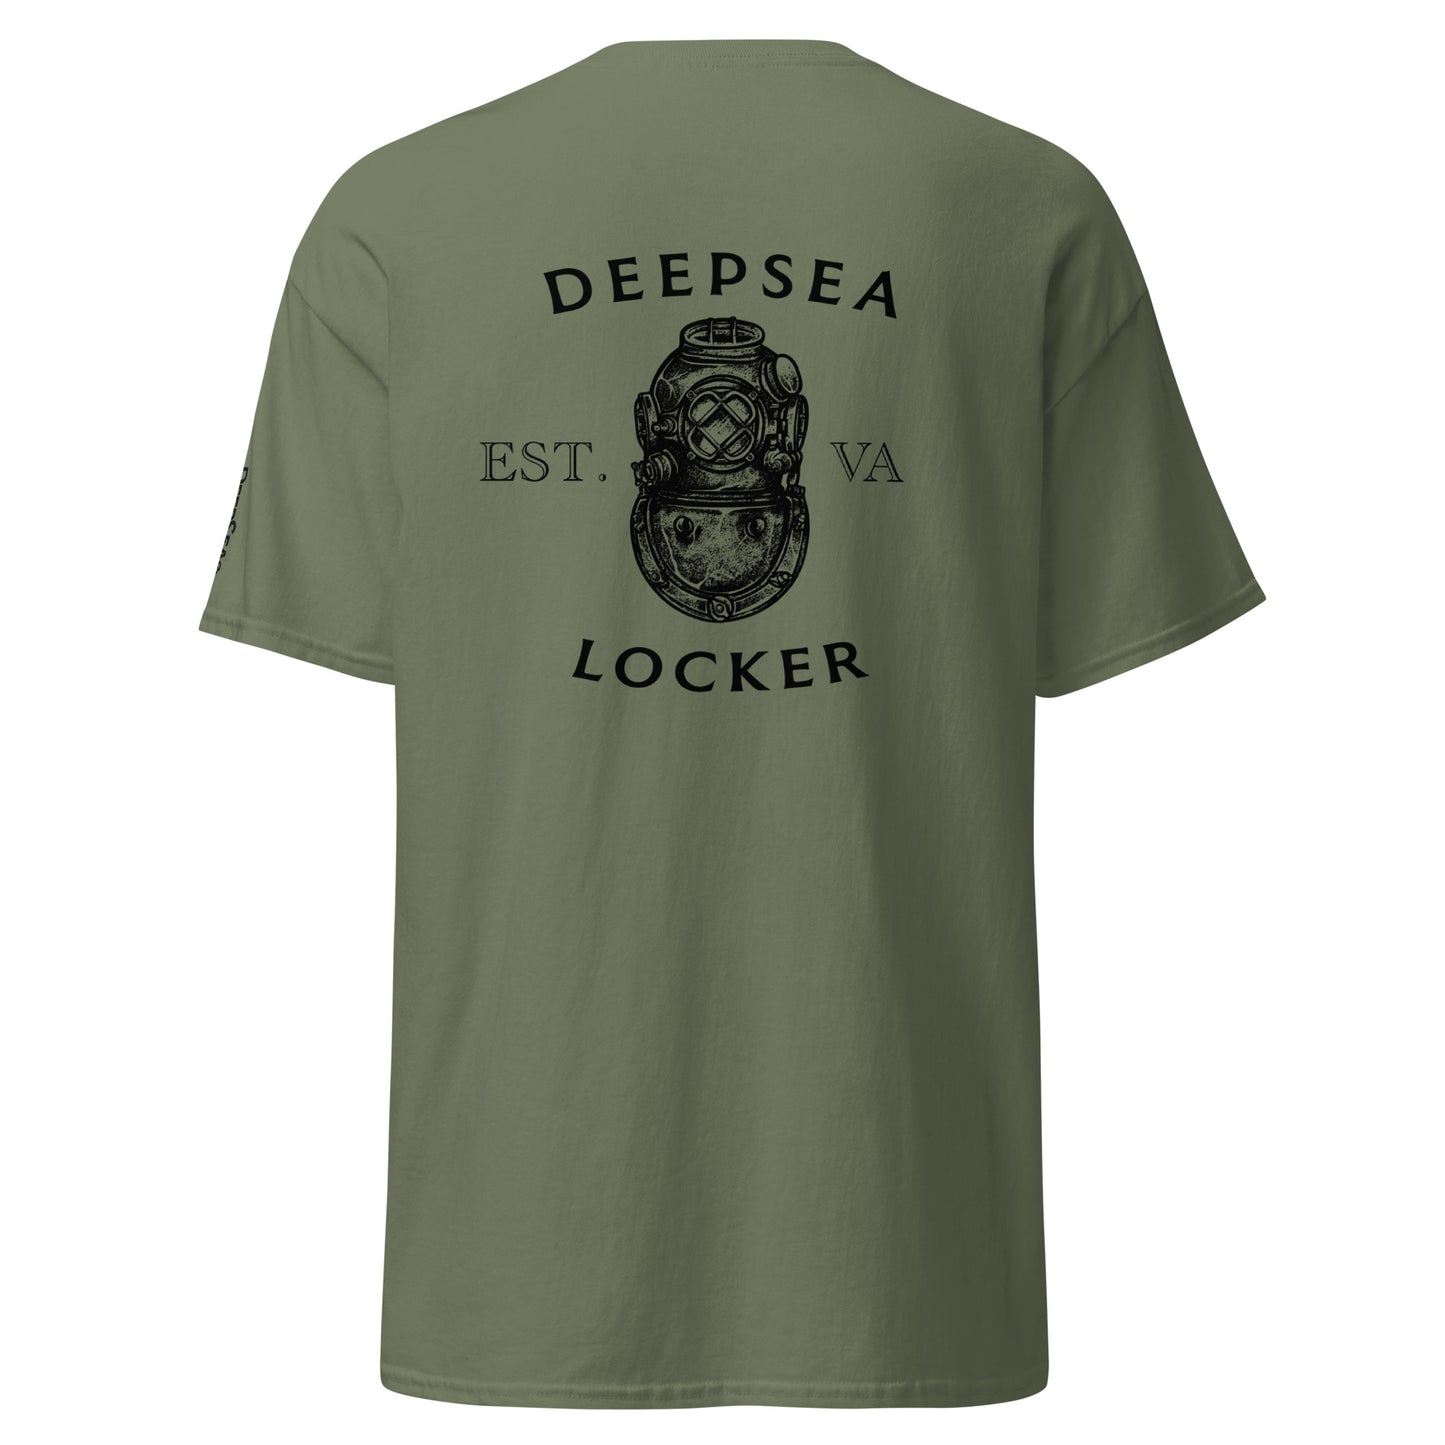 DeepSea Locker VA Men's classic tee